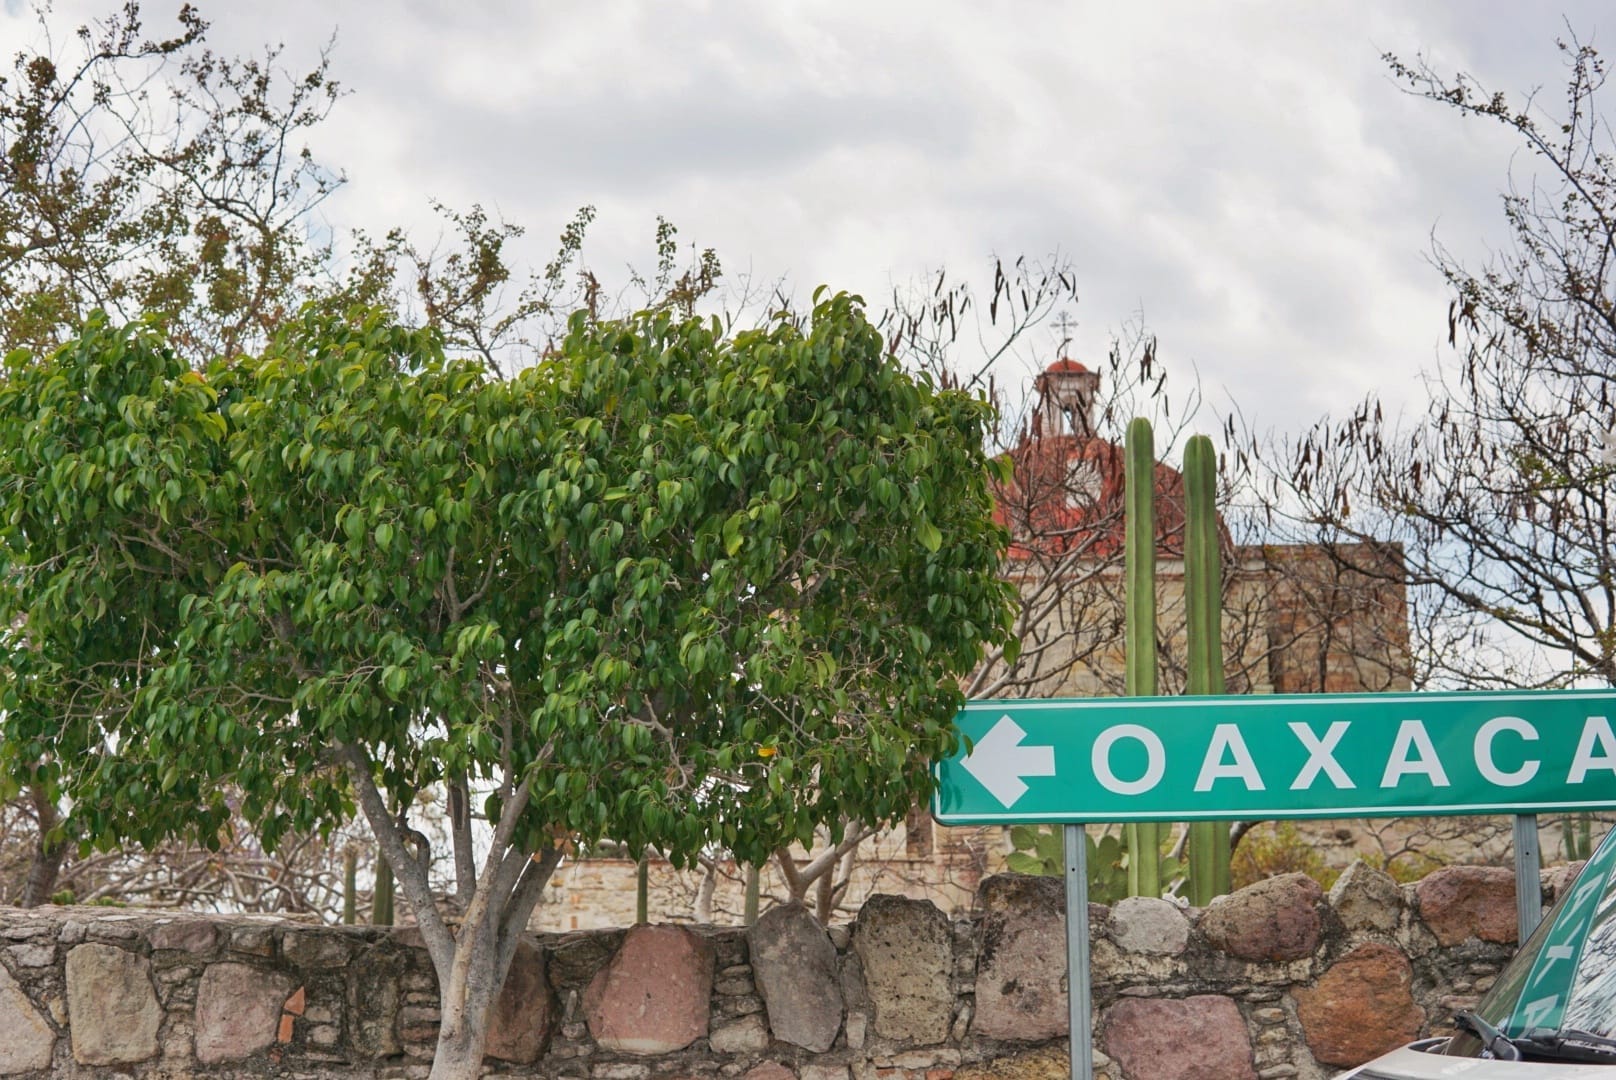 Oaxaca sign - 5 day travel itinerary